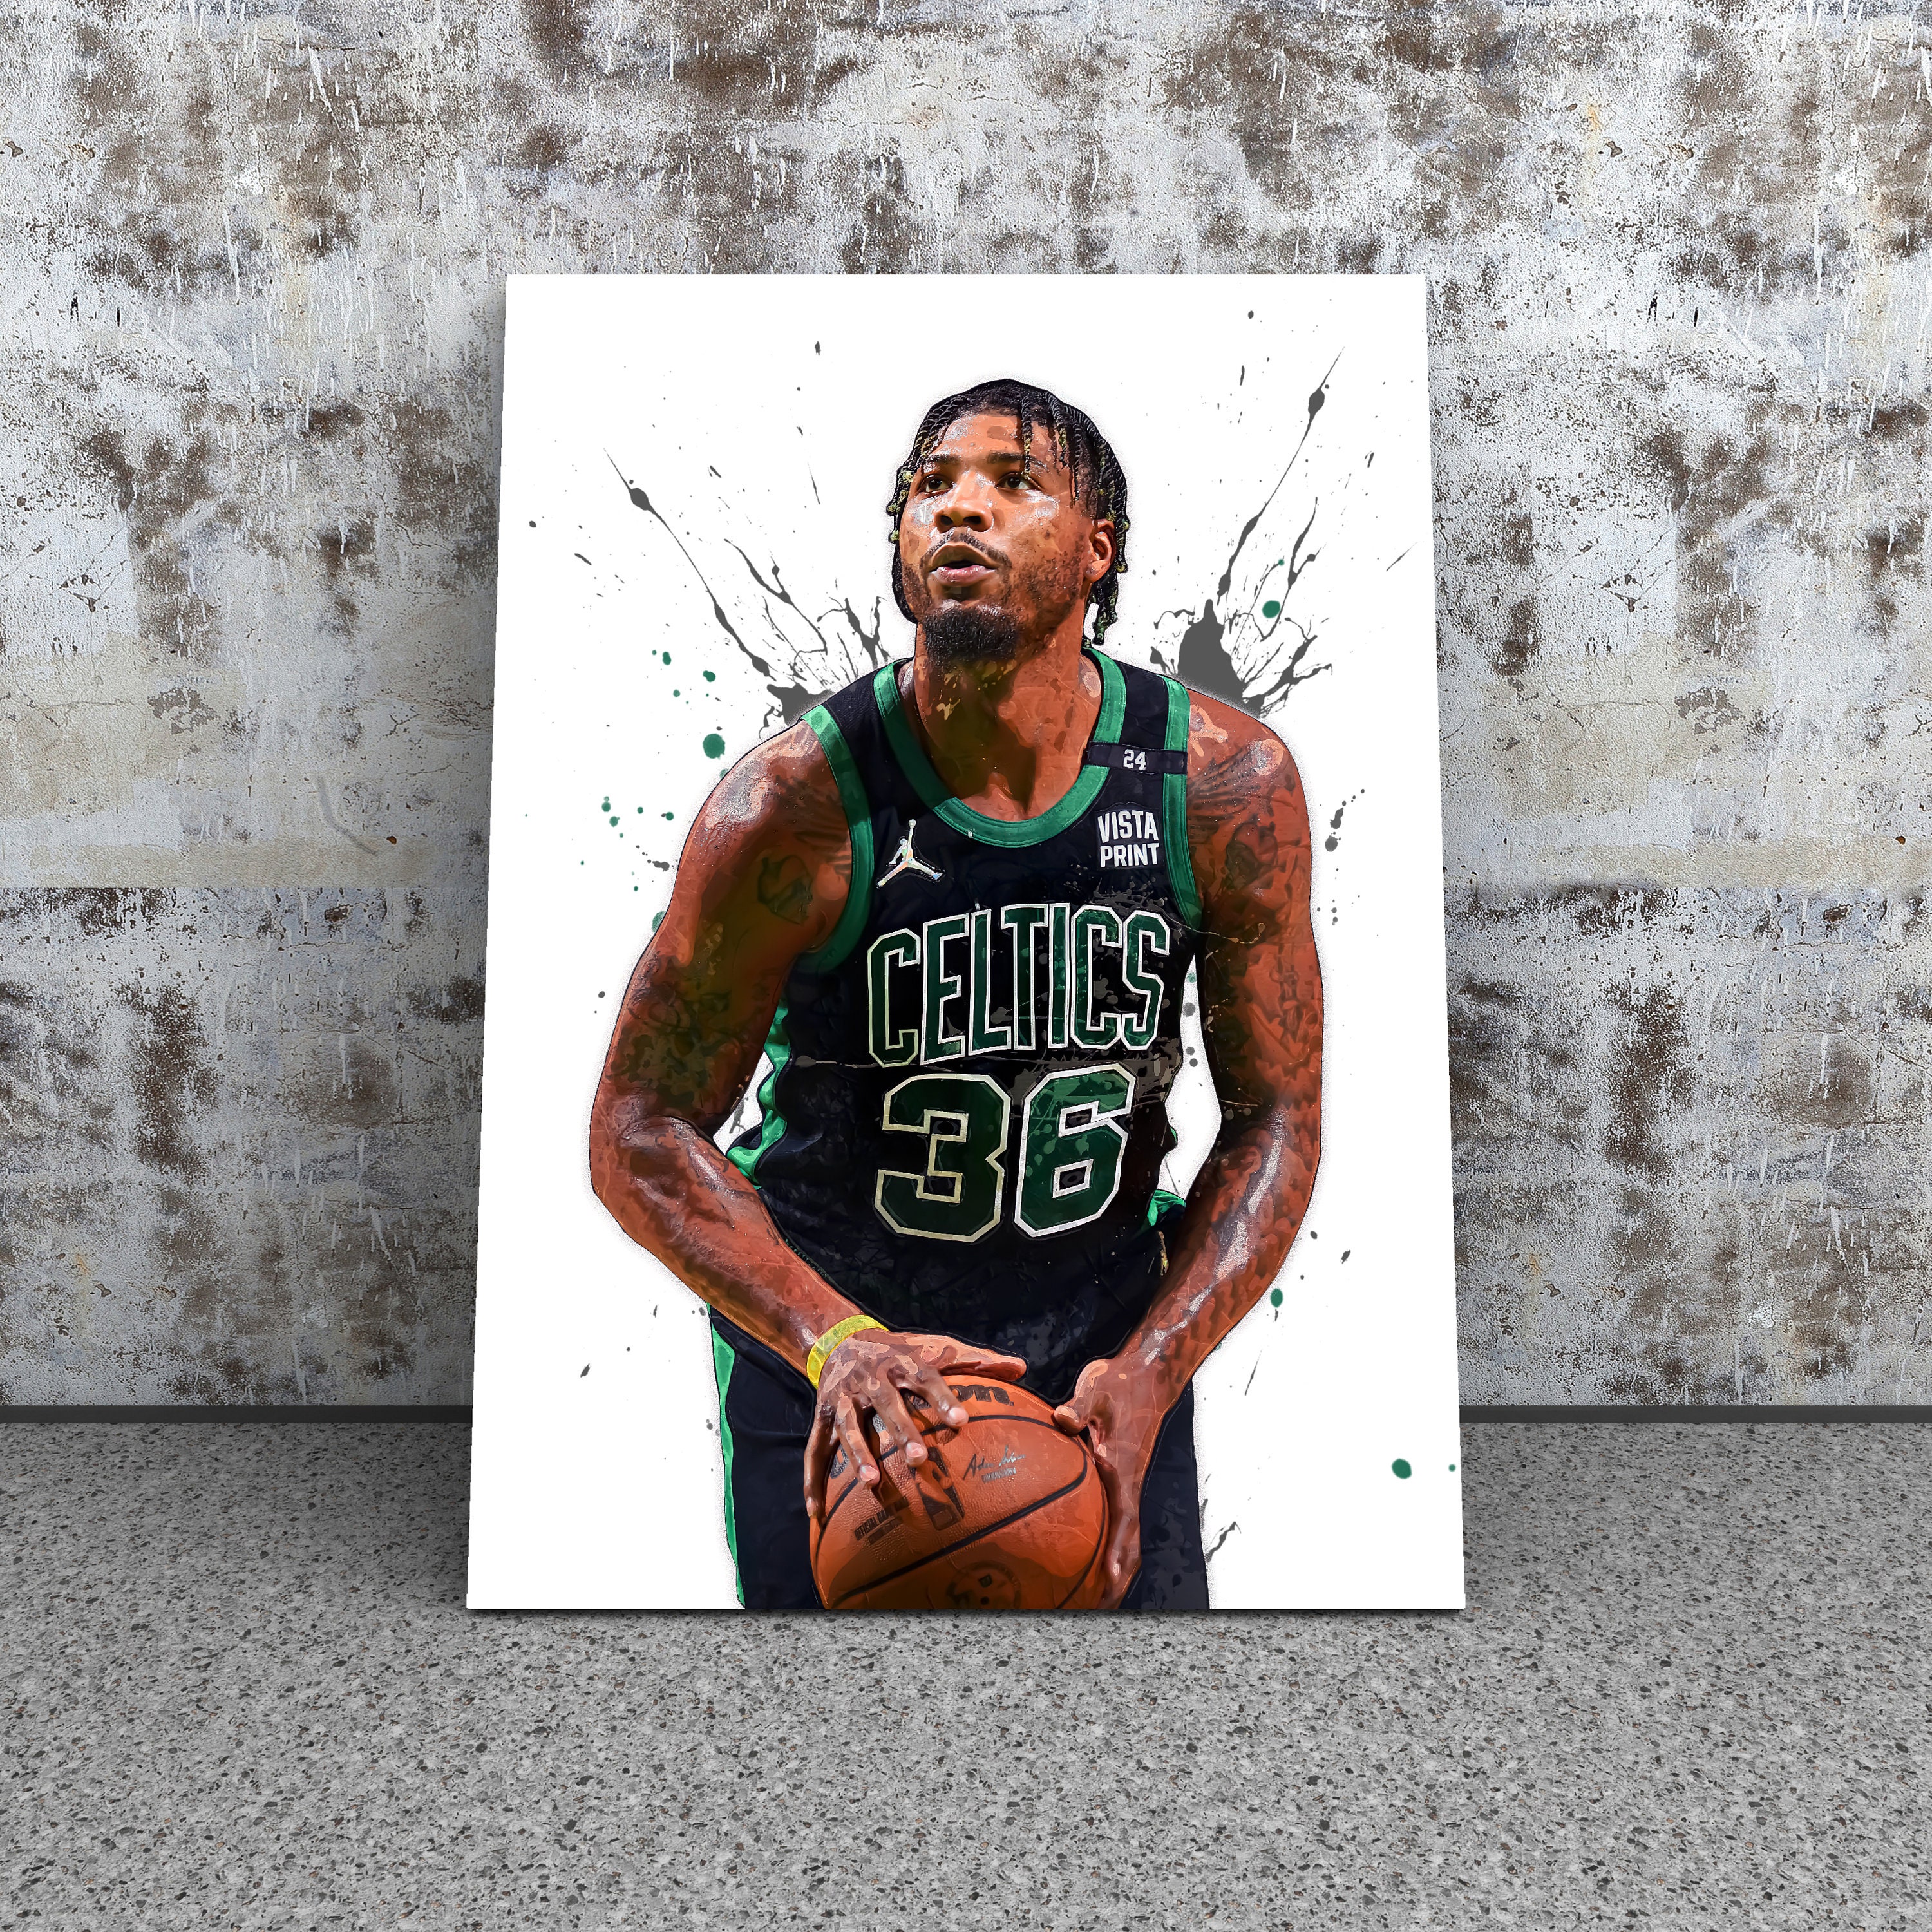 Marcus Smart Signed Celtics Jersey (PSA COA)